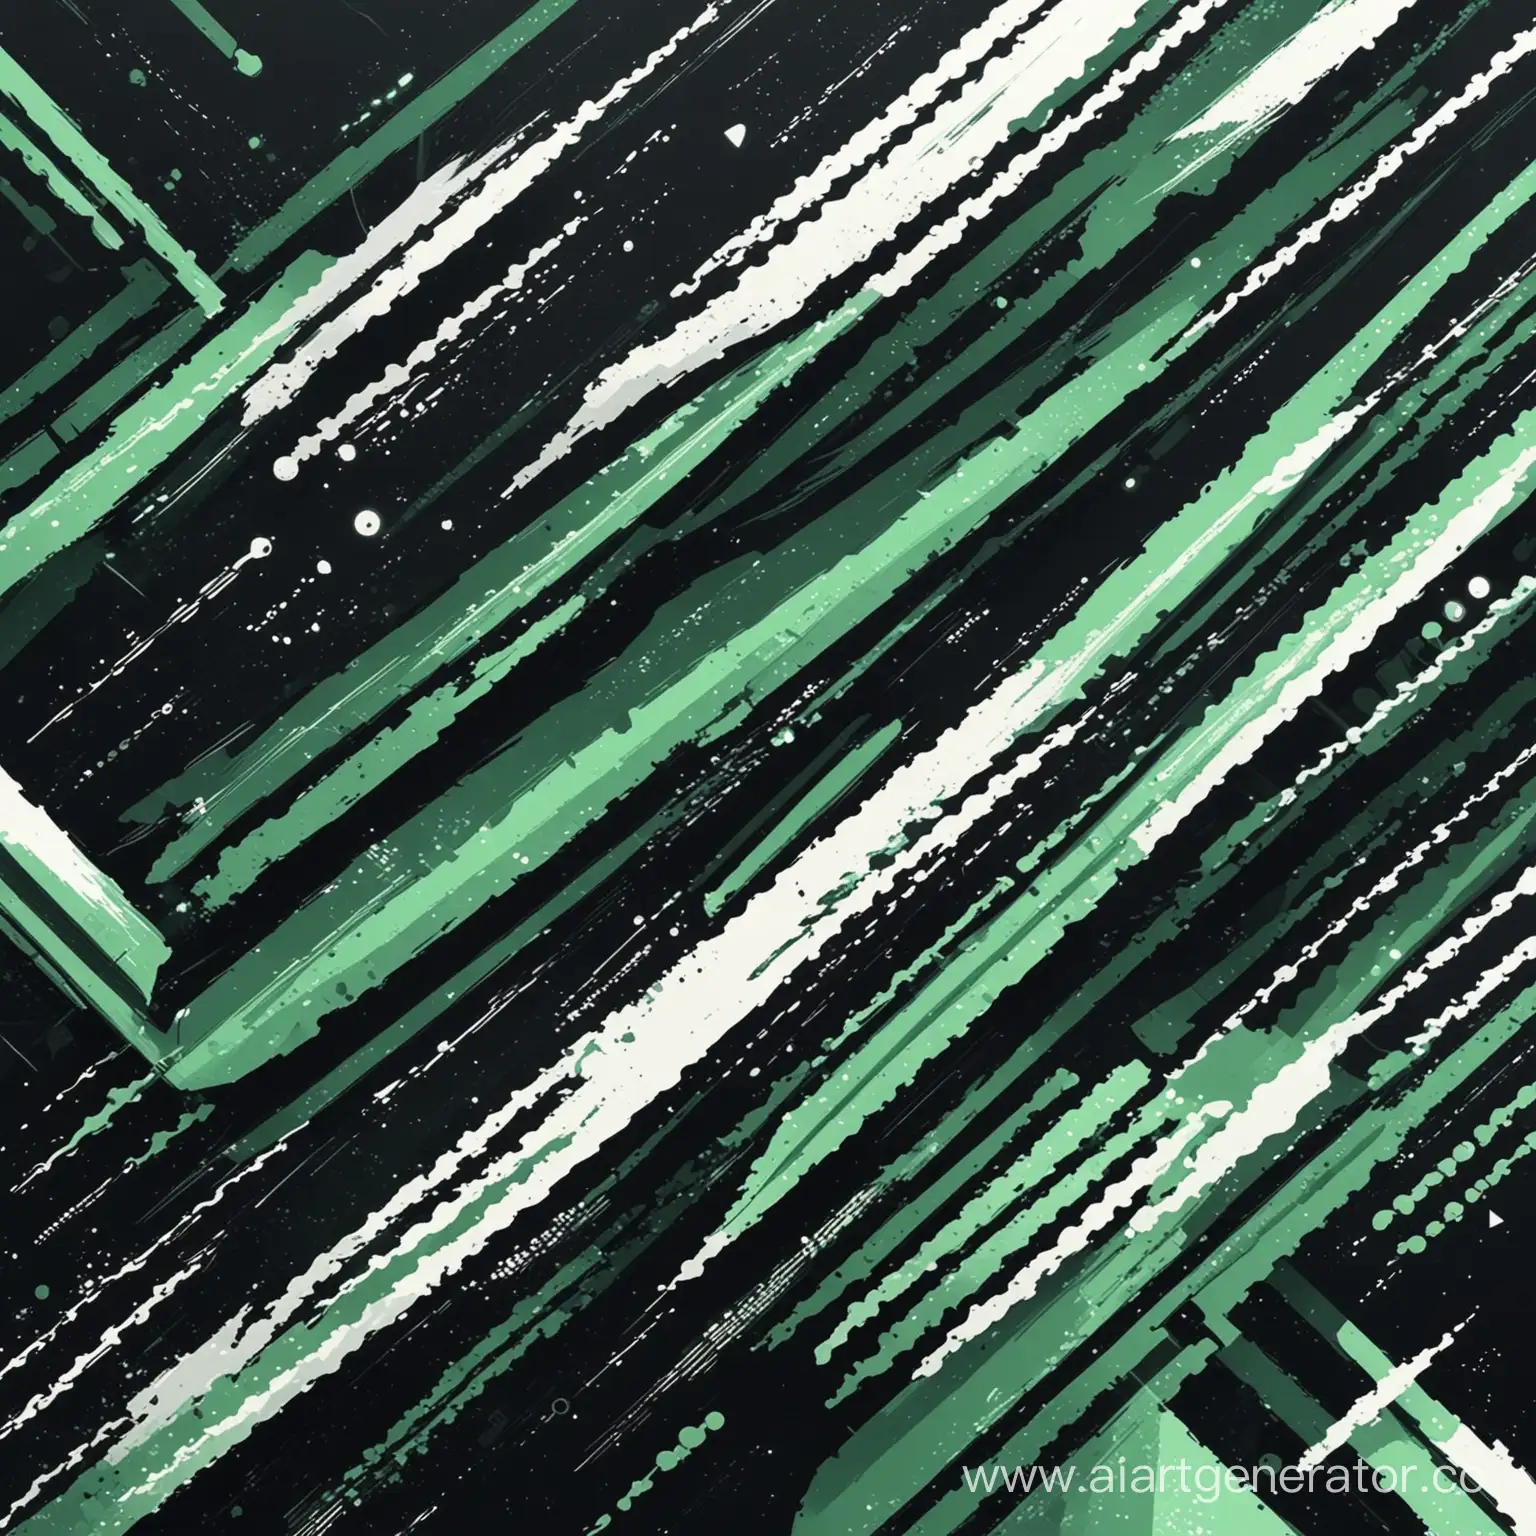 Minimalist-Futurism-Vector-Graphics-in-Black-Green-and-White